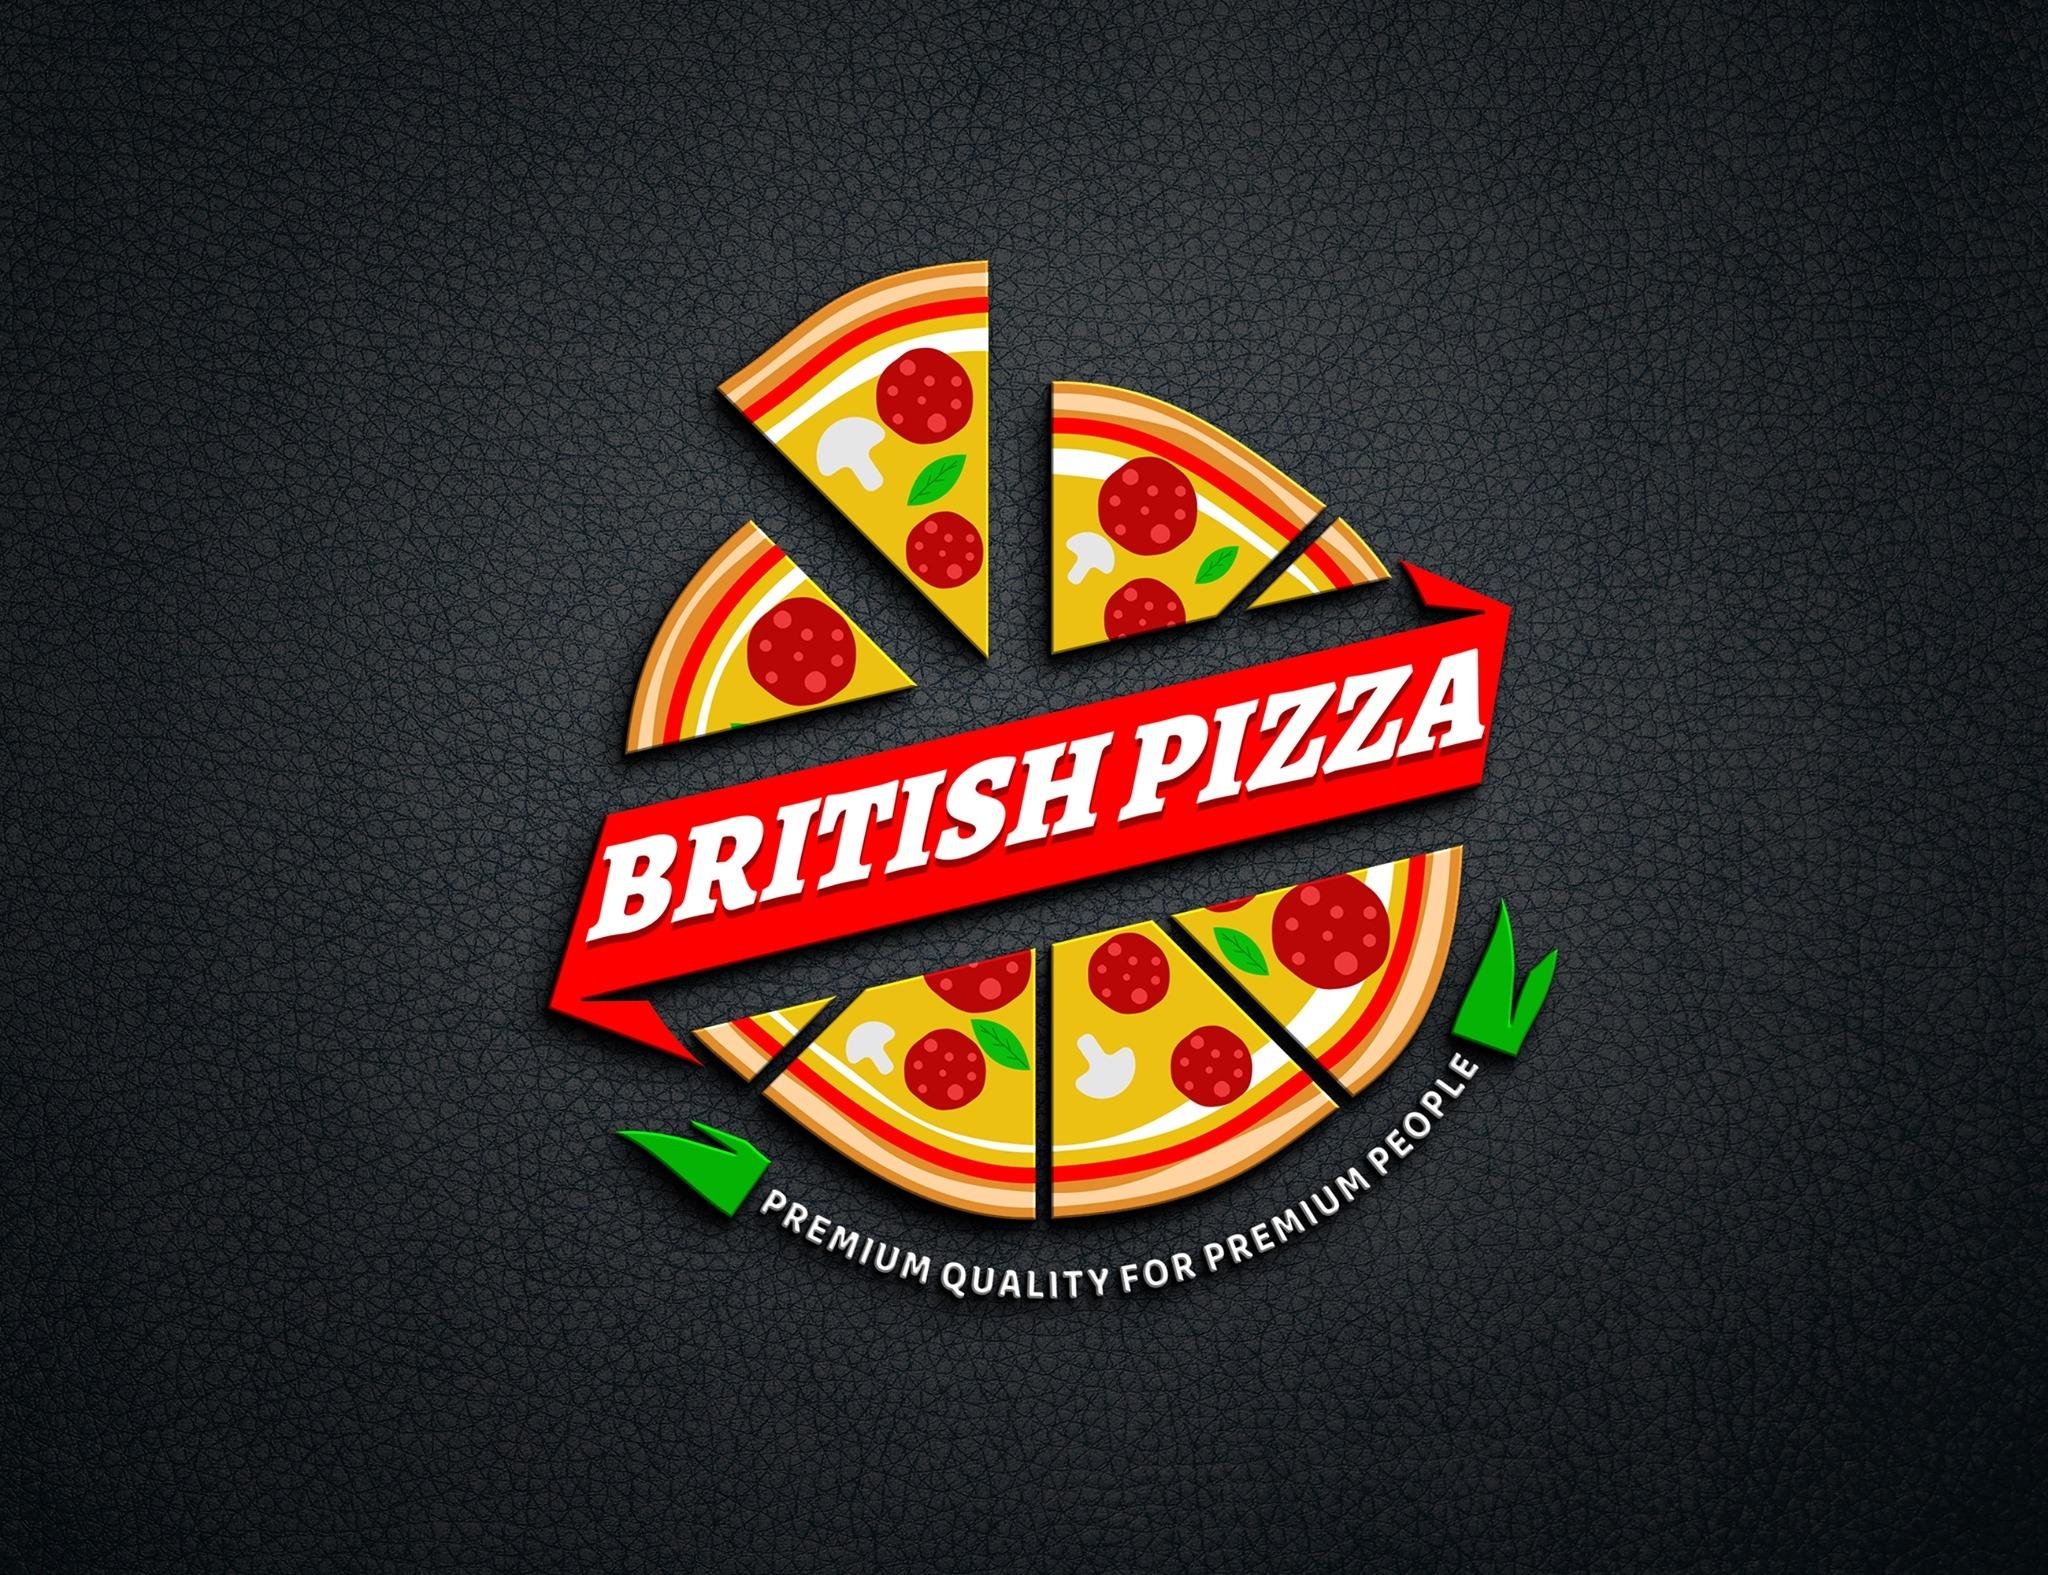 British Pizza - Vastral